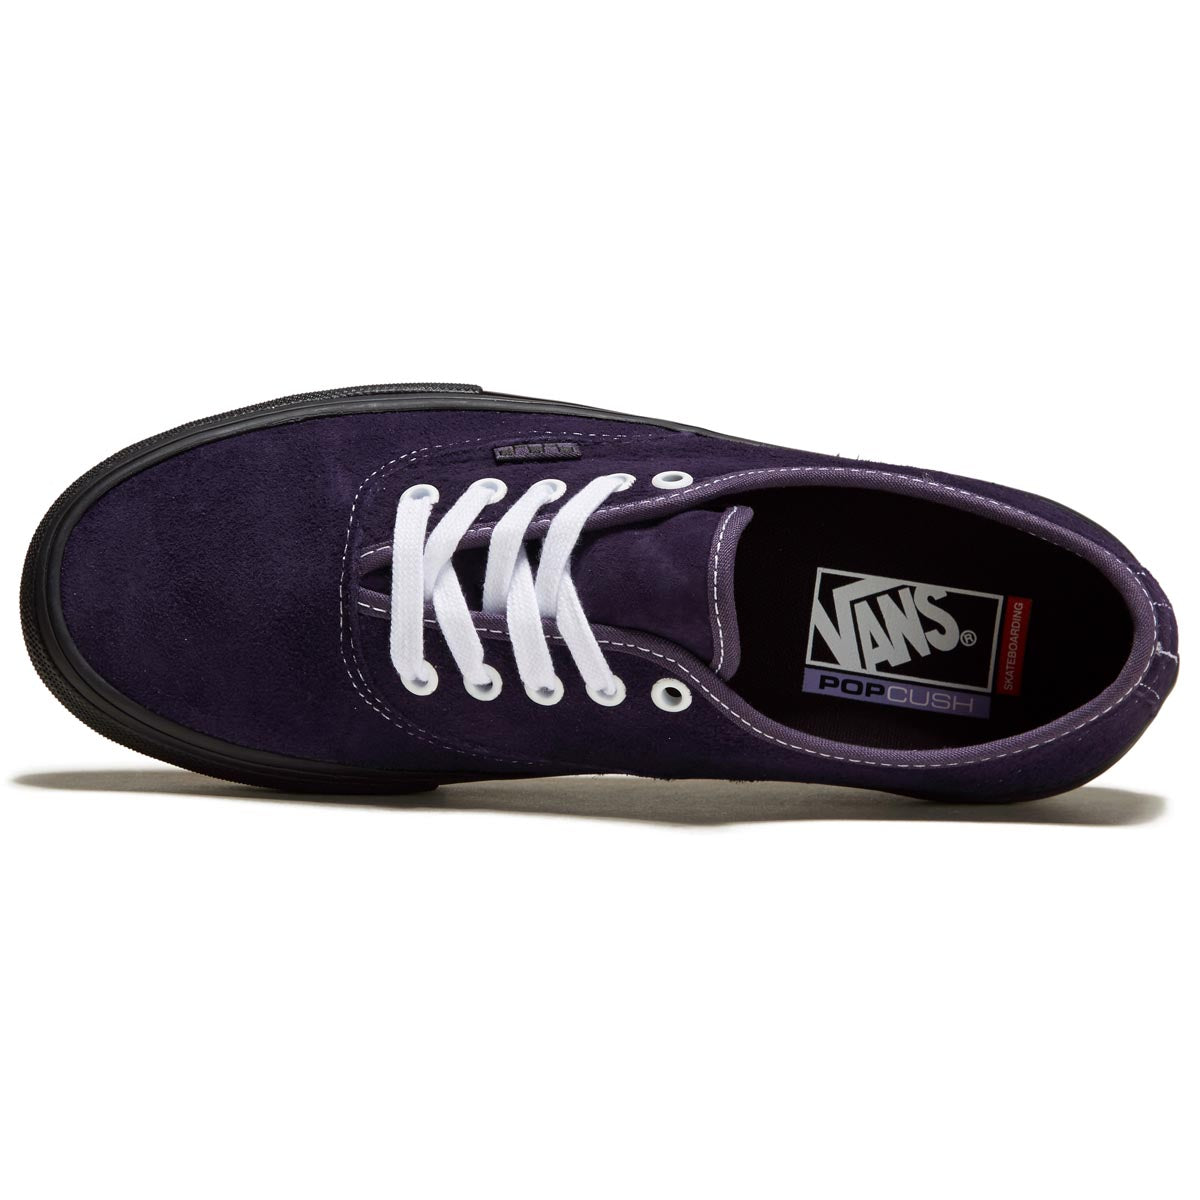 Vans Skate Authentic Shoes - Pig Suede Dark Purple/Black image 3